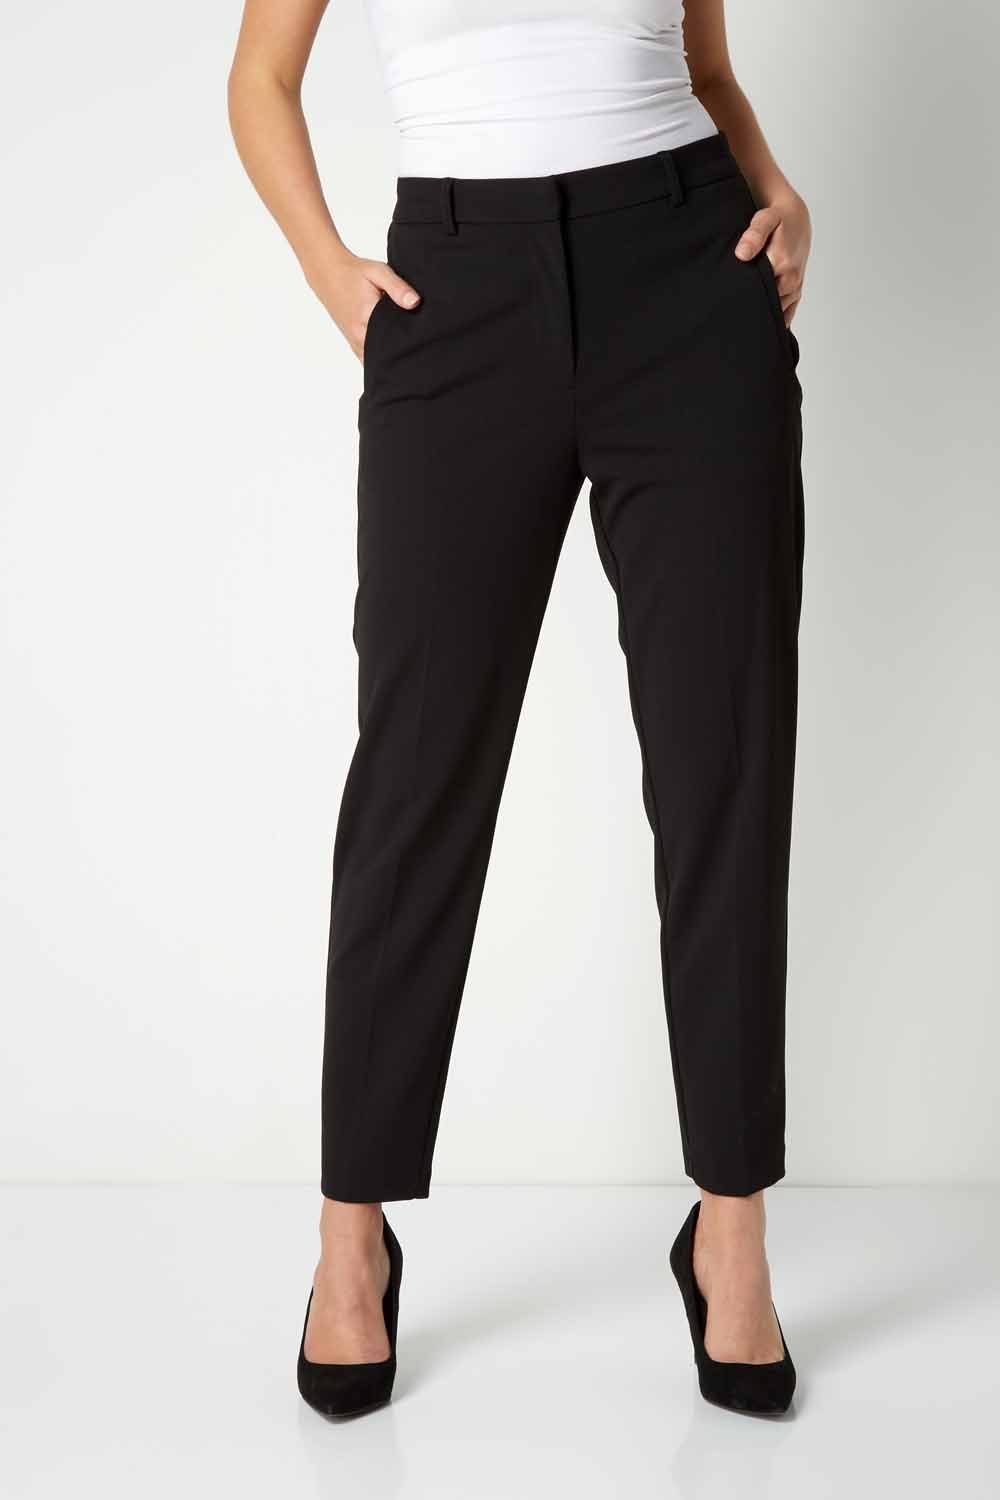 Black Trousers For Women | Black Work Trousers | Roman UK-saigonsouth.com.vn